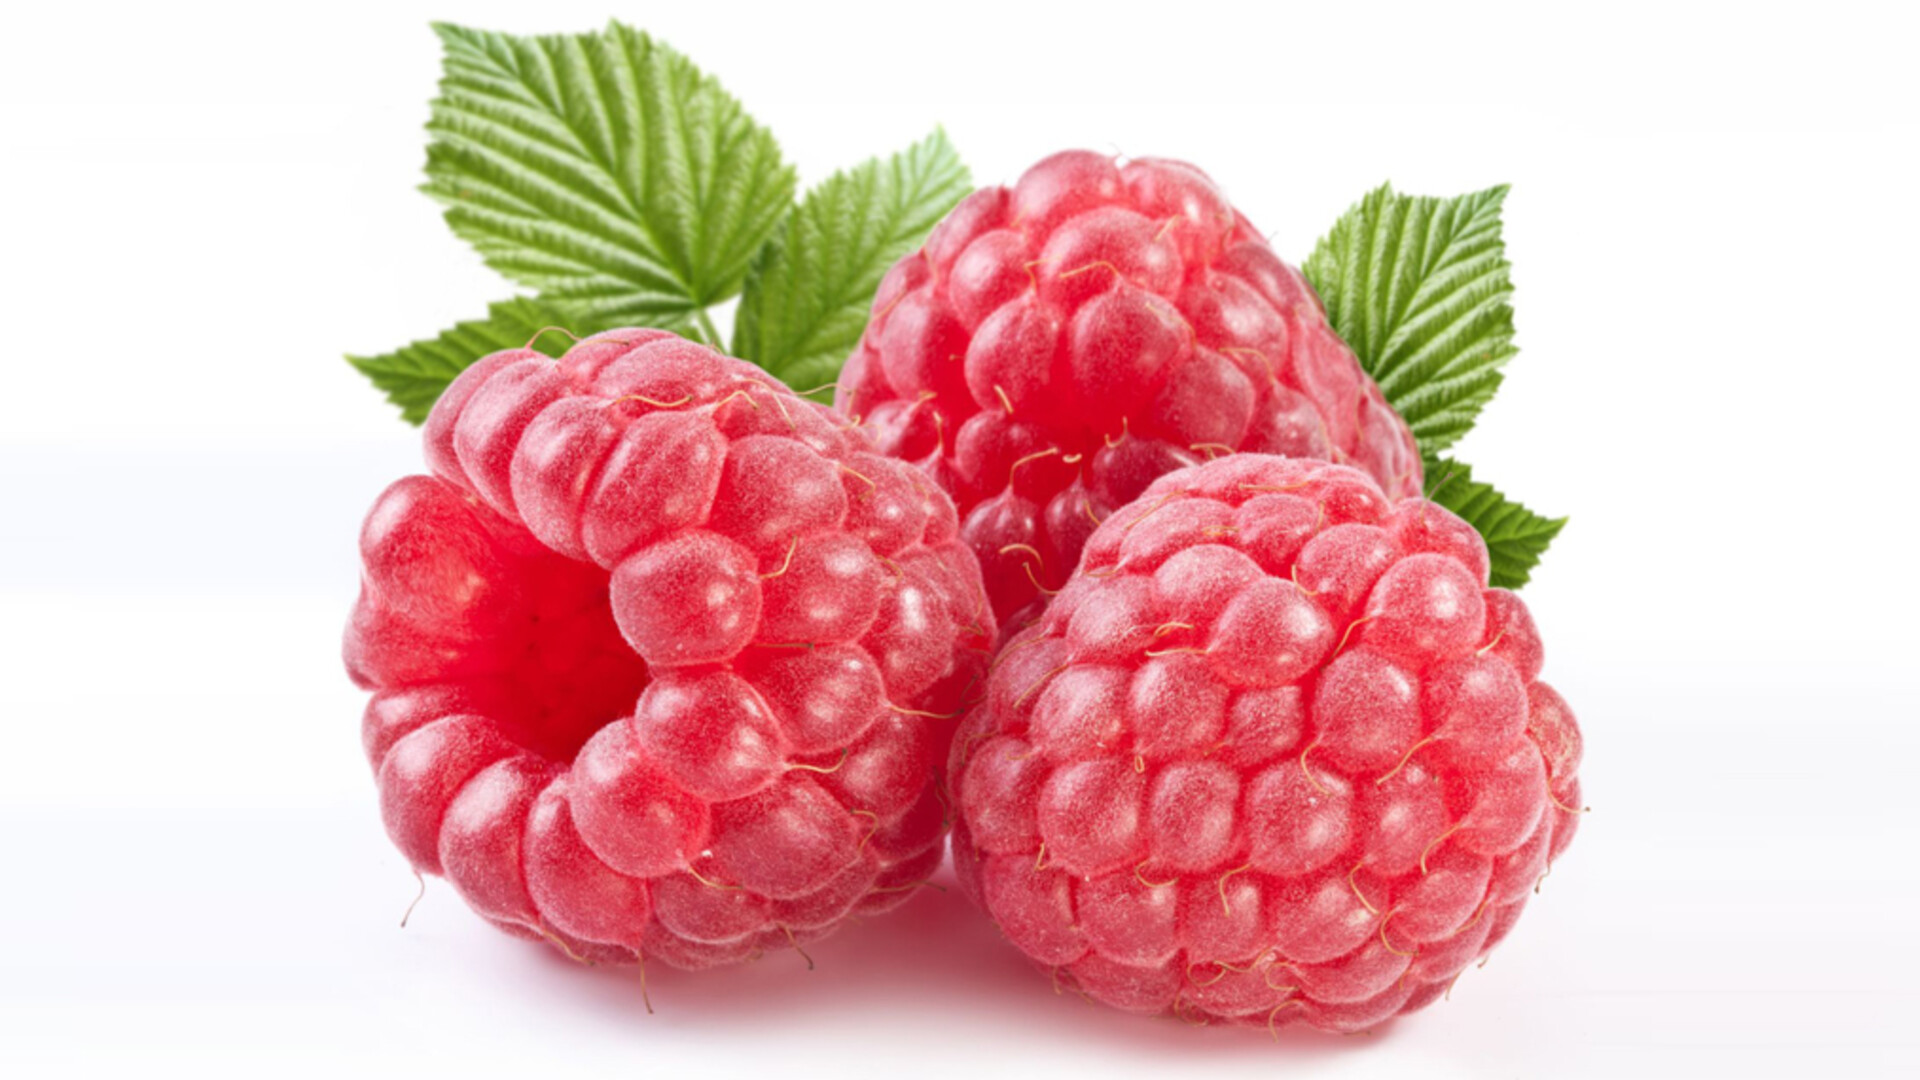 Raspberries are Healthy Pt 2